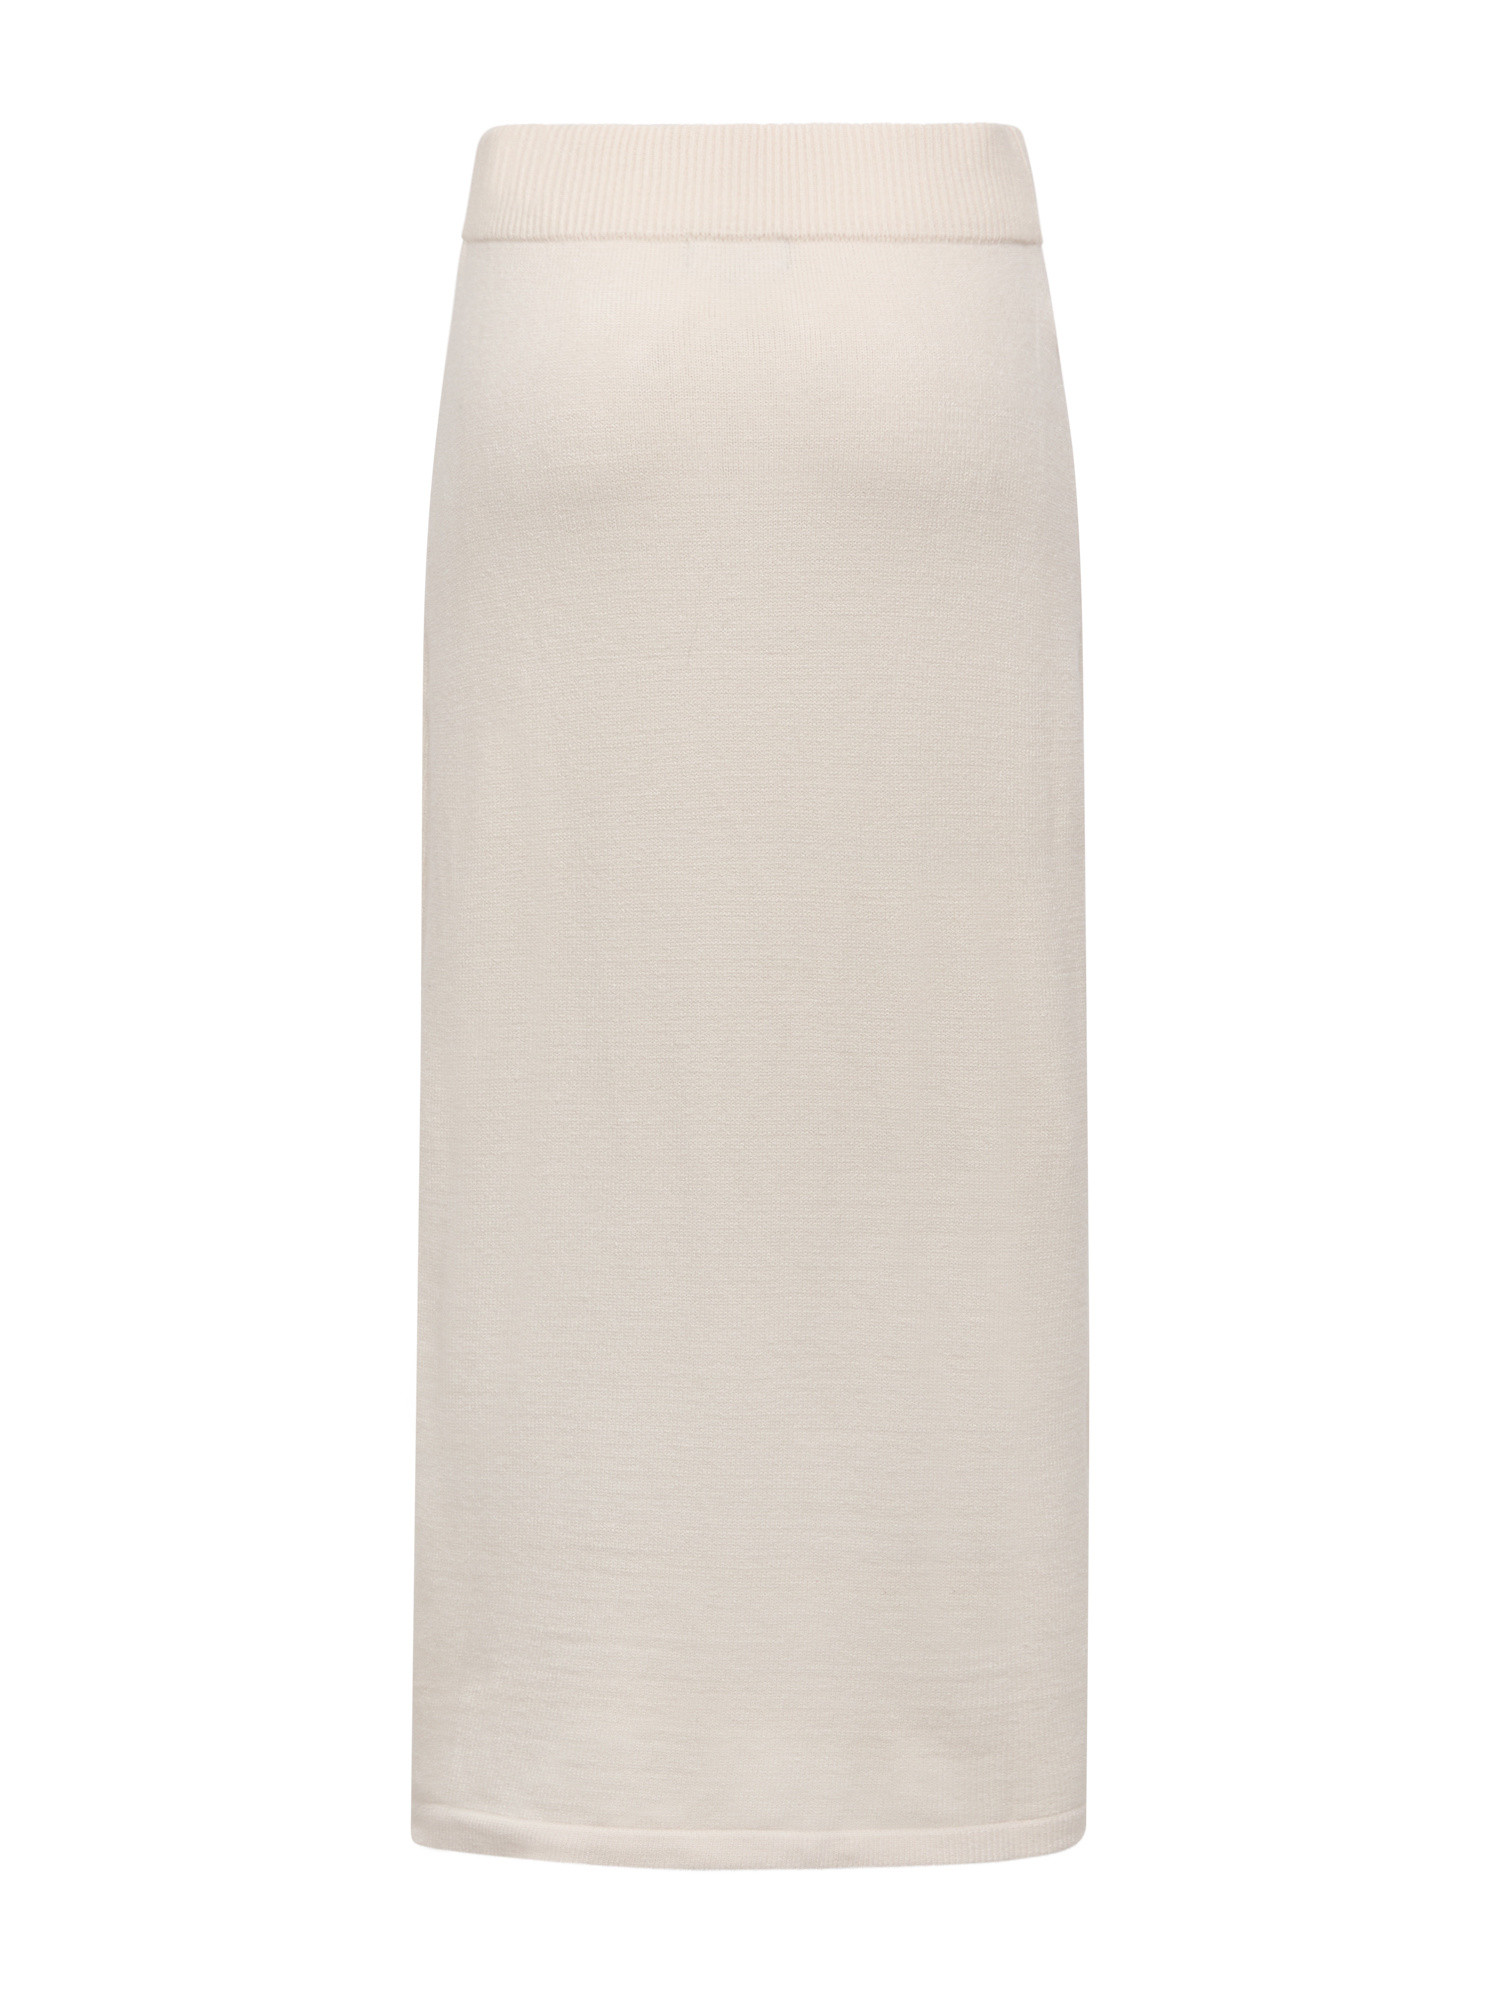 Koan - Knitted midi skirt, White Cream, large image number 1